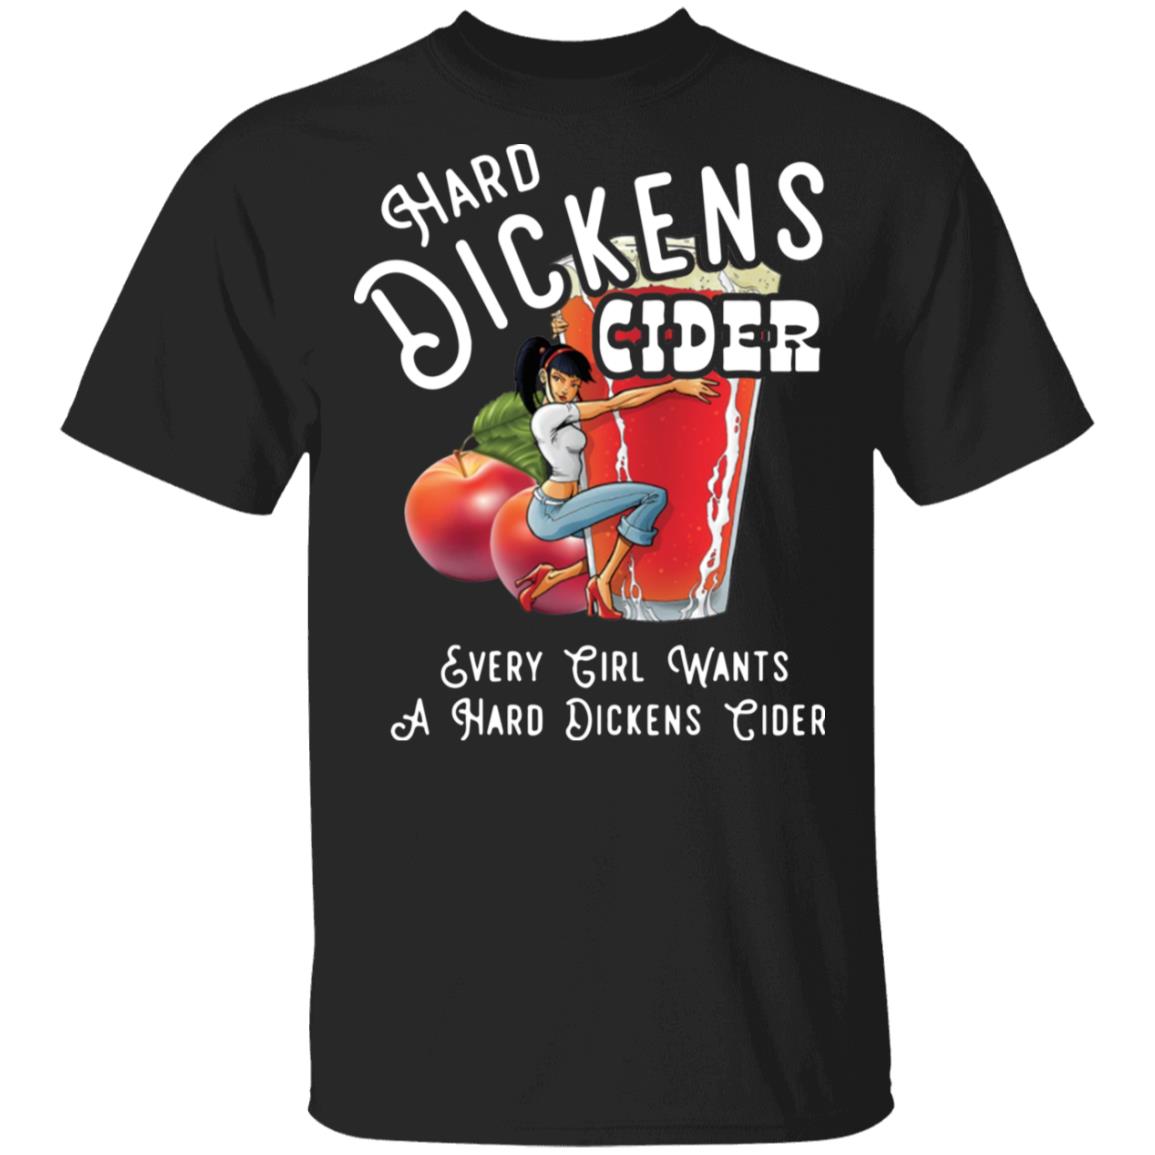 Good Stories Start With Aickens-cider-shirt